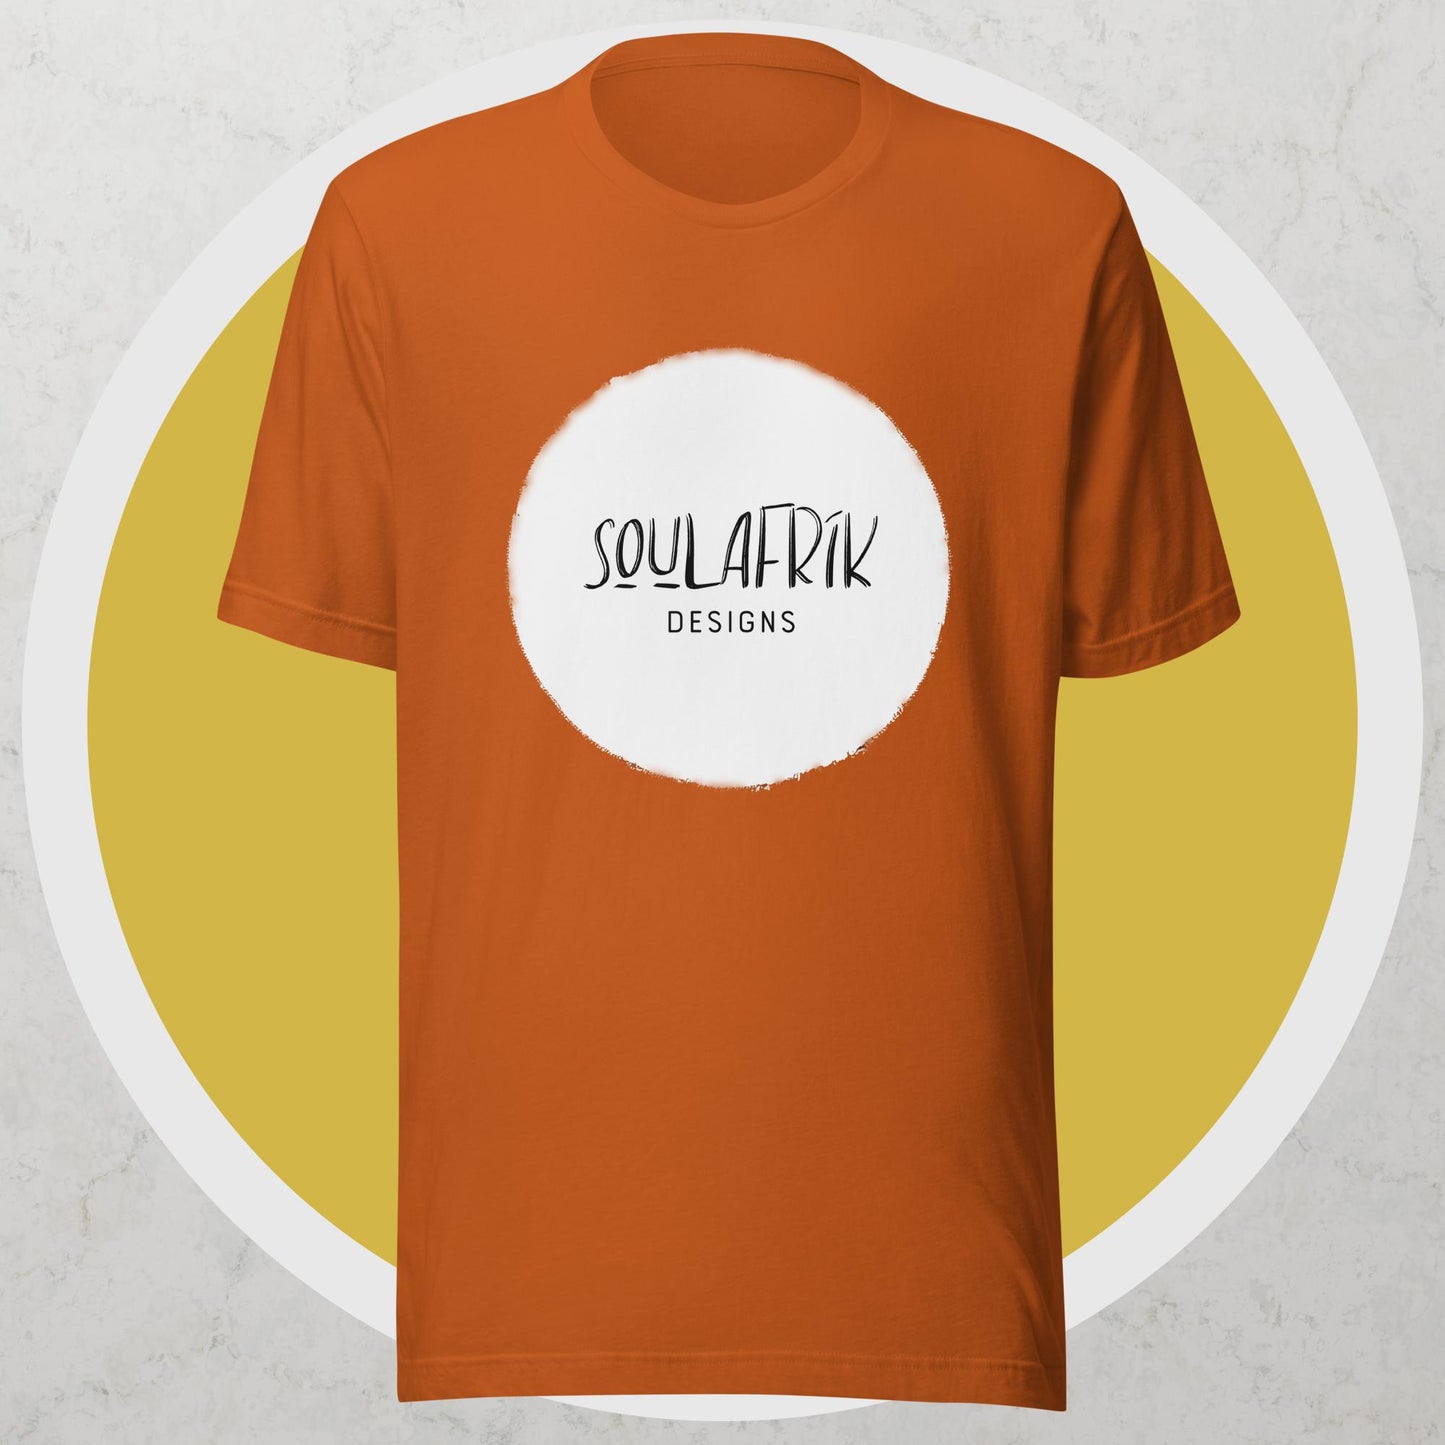 SOULAFRIK LOGO SHIRT: Unisex t-shirt